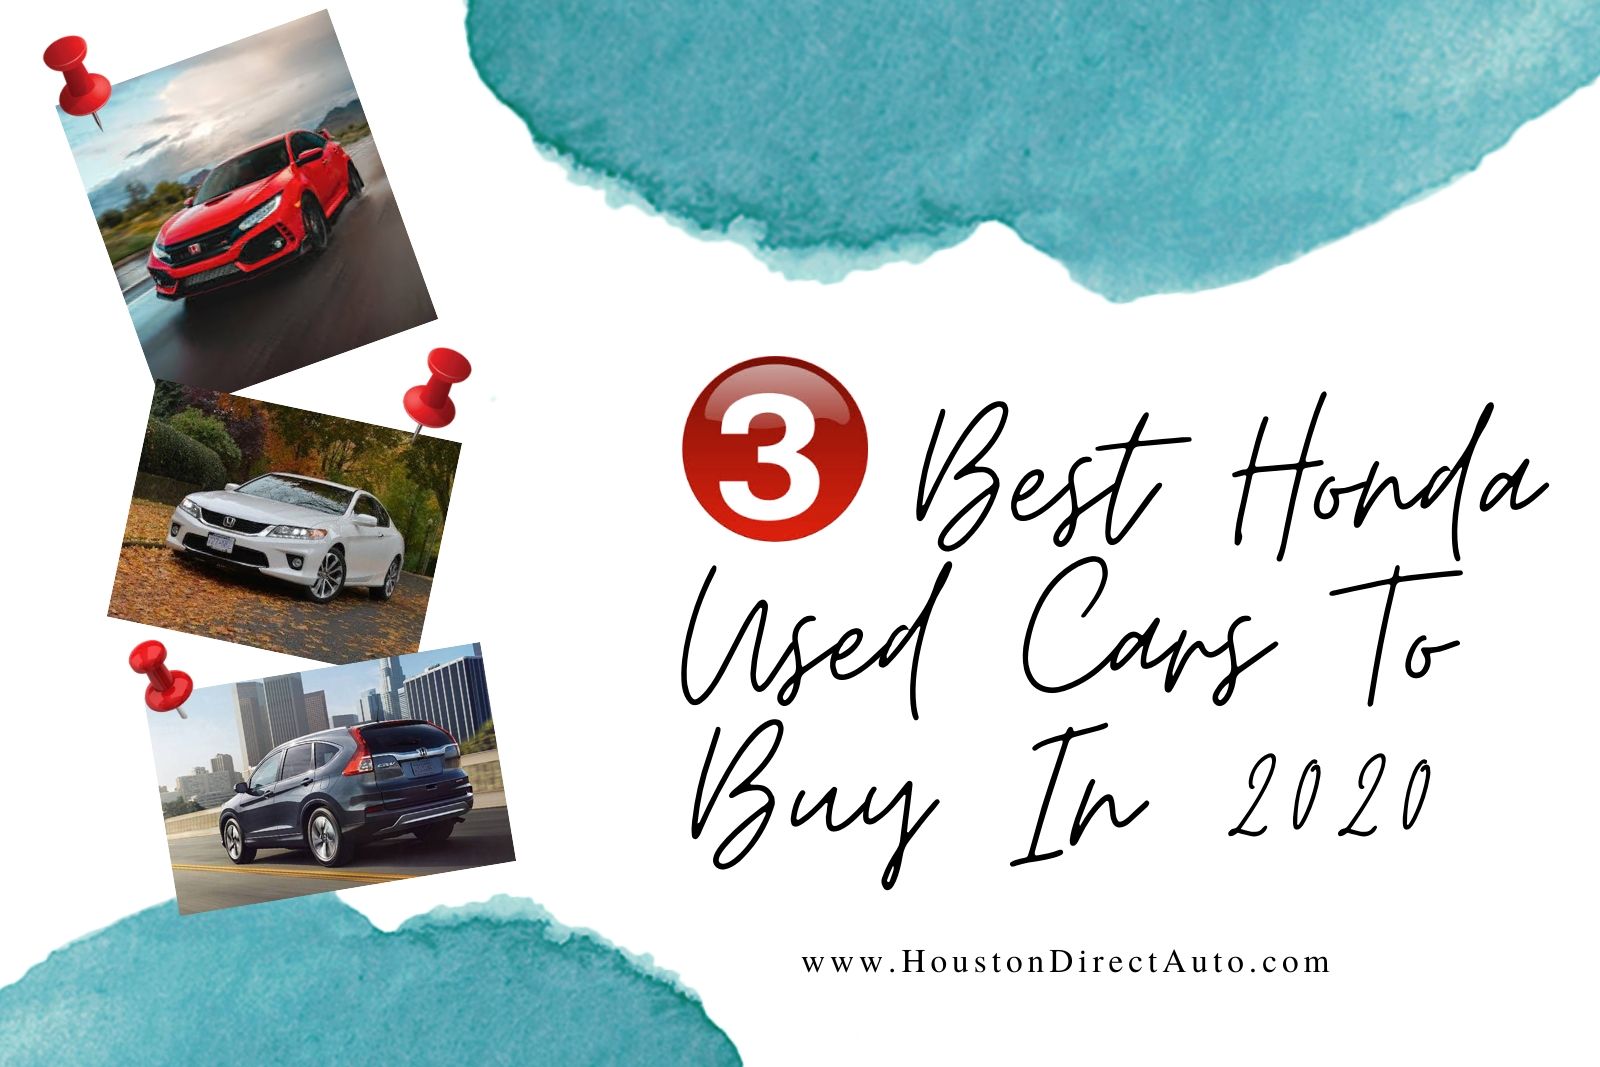 3 Best Honda Used Cars To Buy In 2020